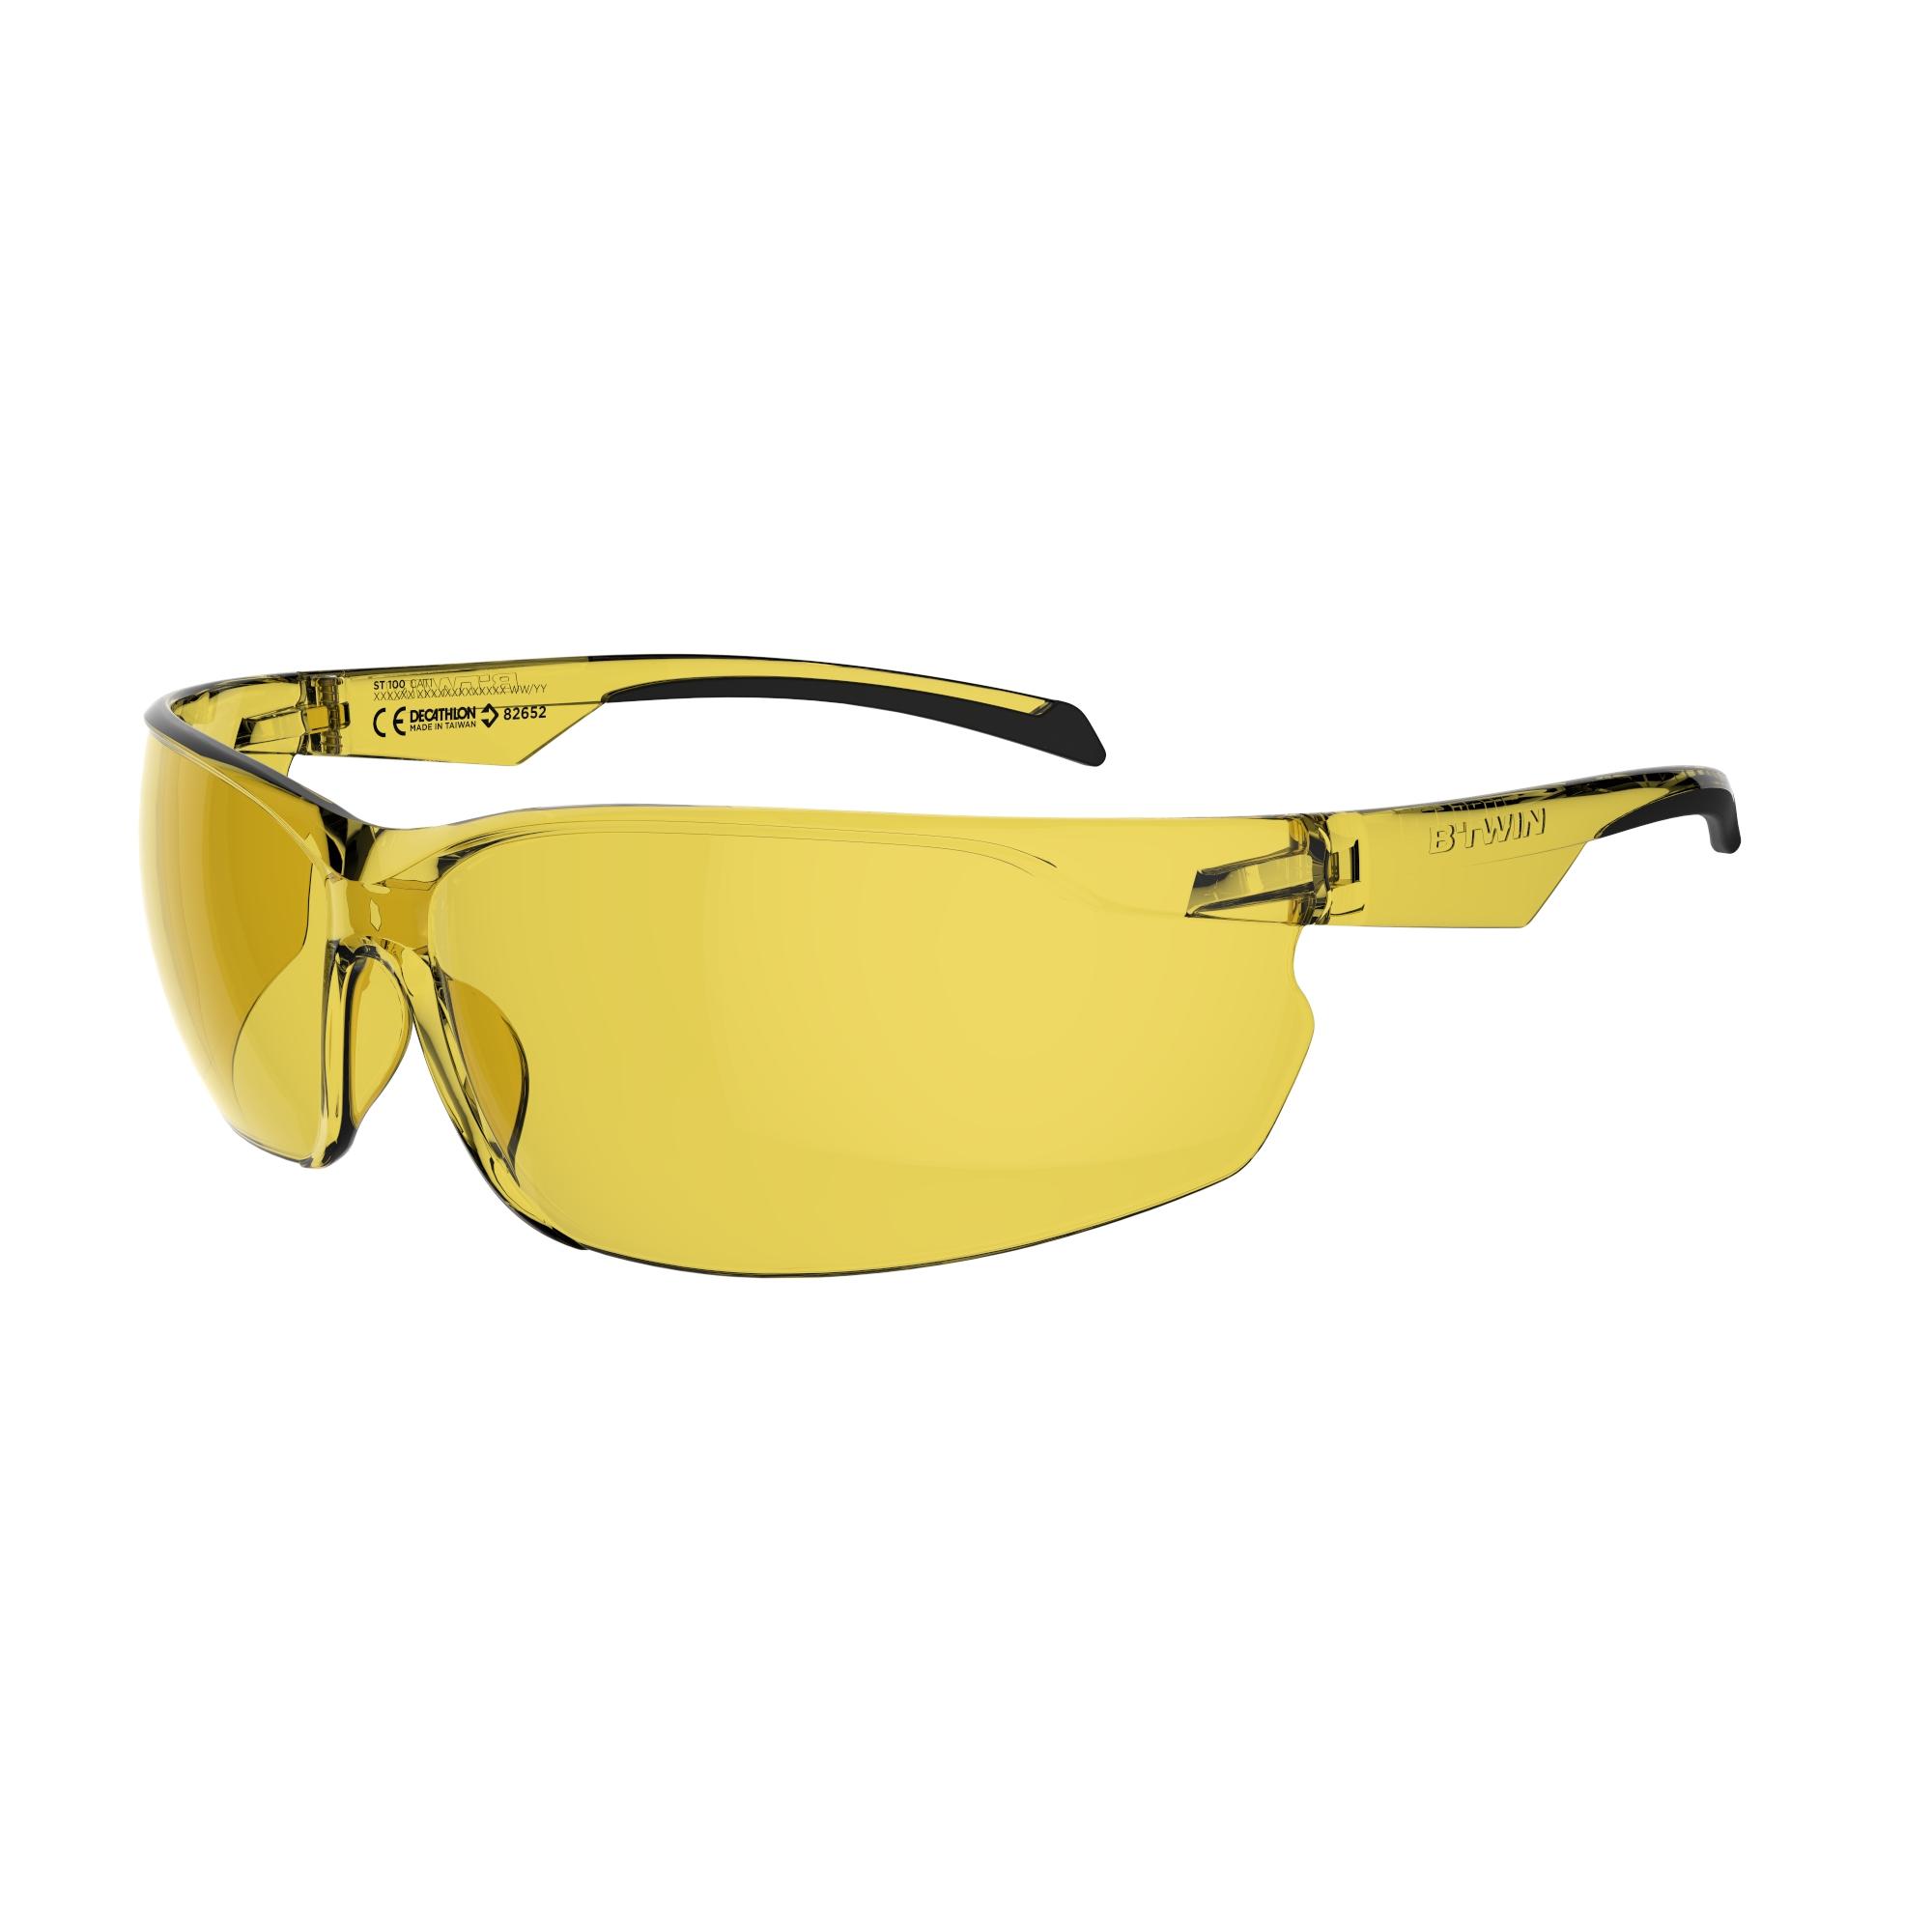 ST 100 MTB Sunglasses Category 1 - Adults - ROCKRIDER